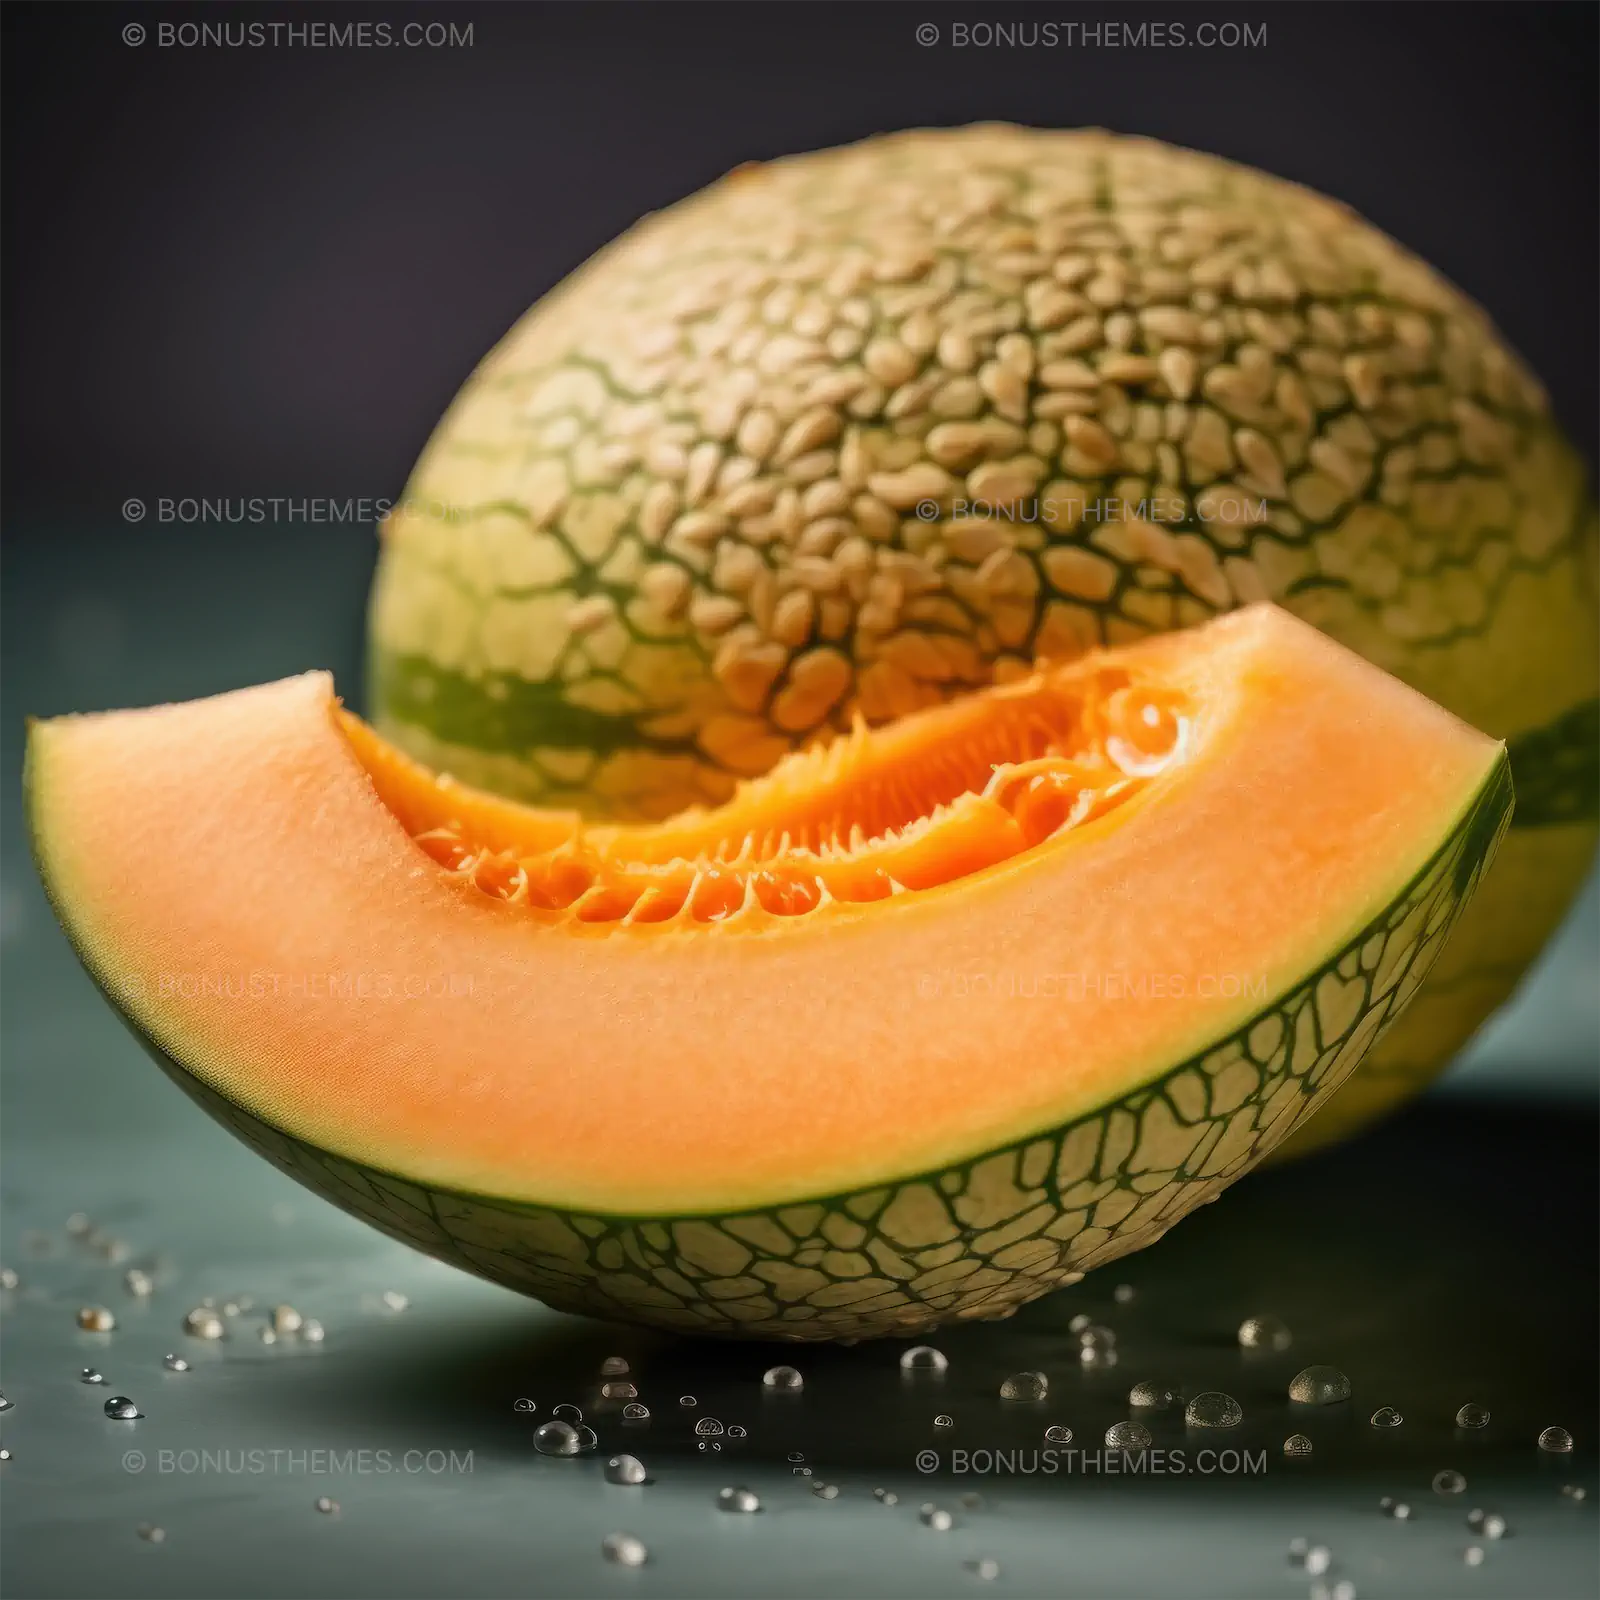 A piece of melon